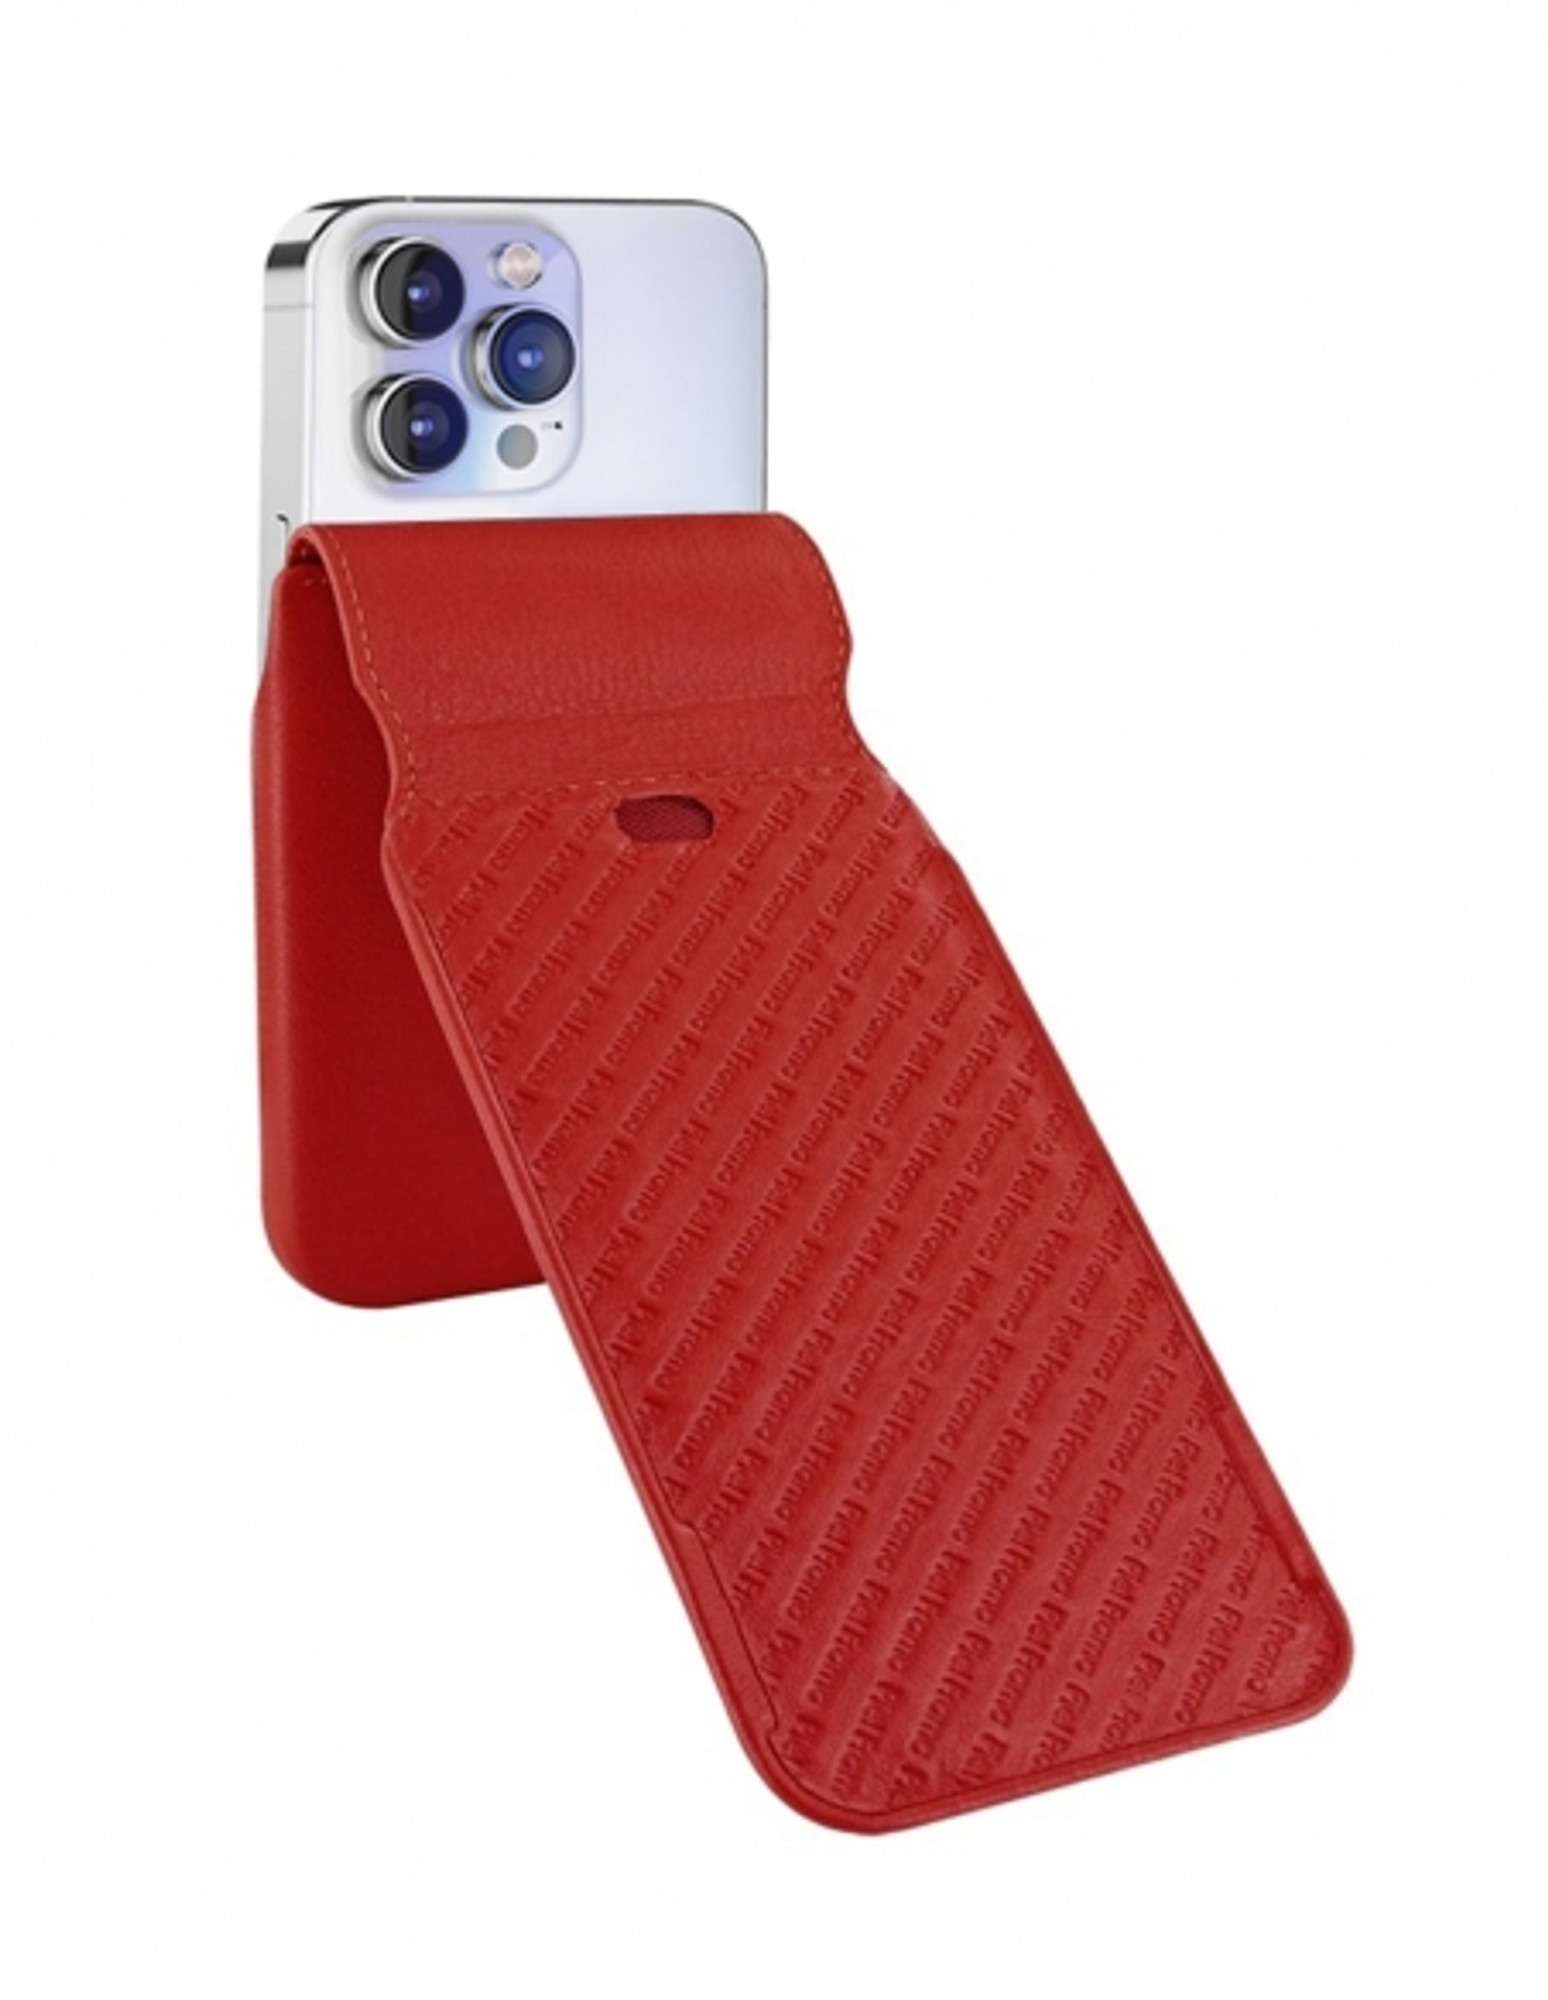 Carcasa COOL Para iPhone 14 Pro Max Magnética Cover Rojo